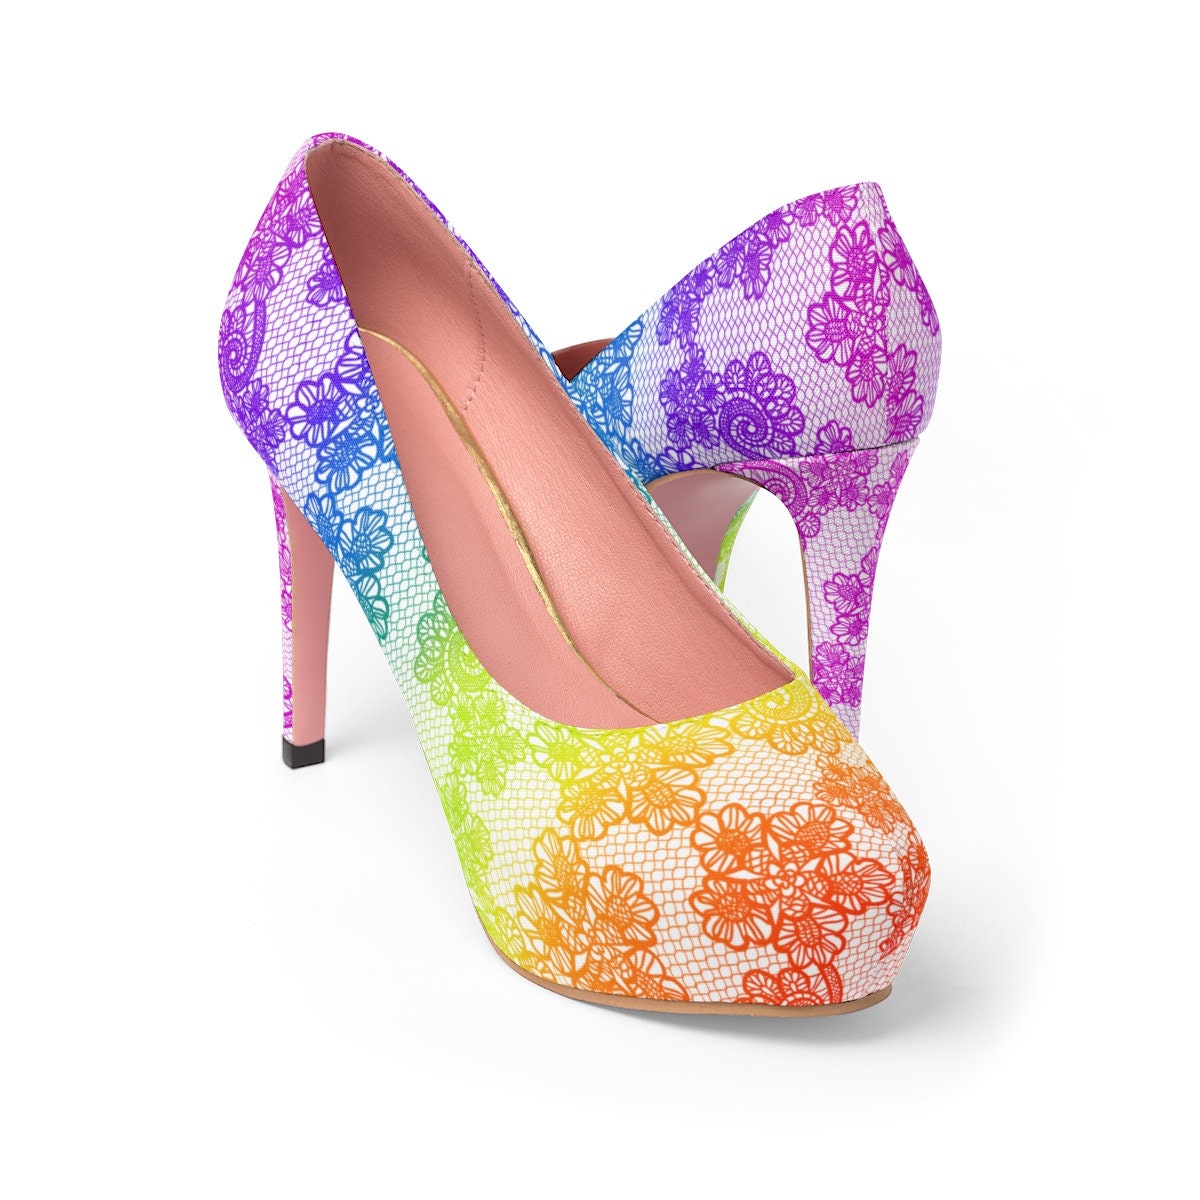 colorful platform heels